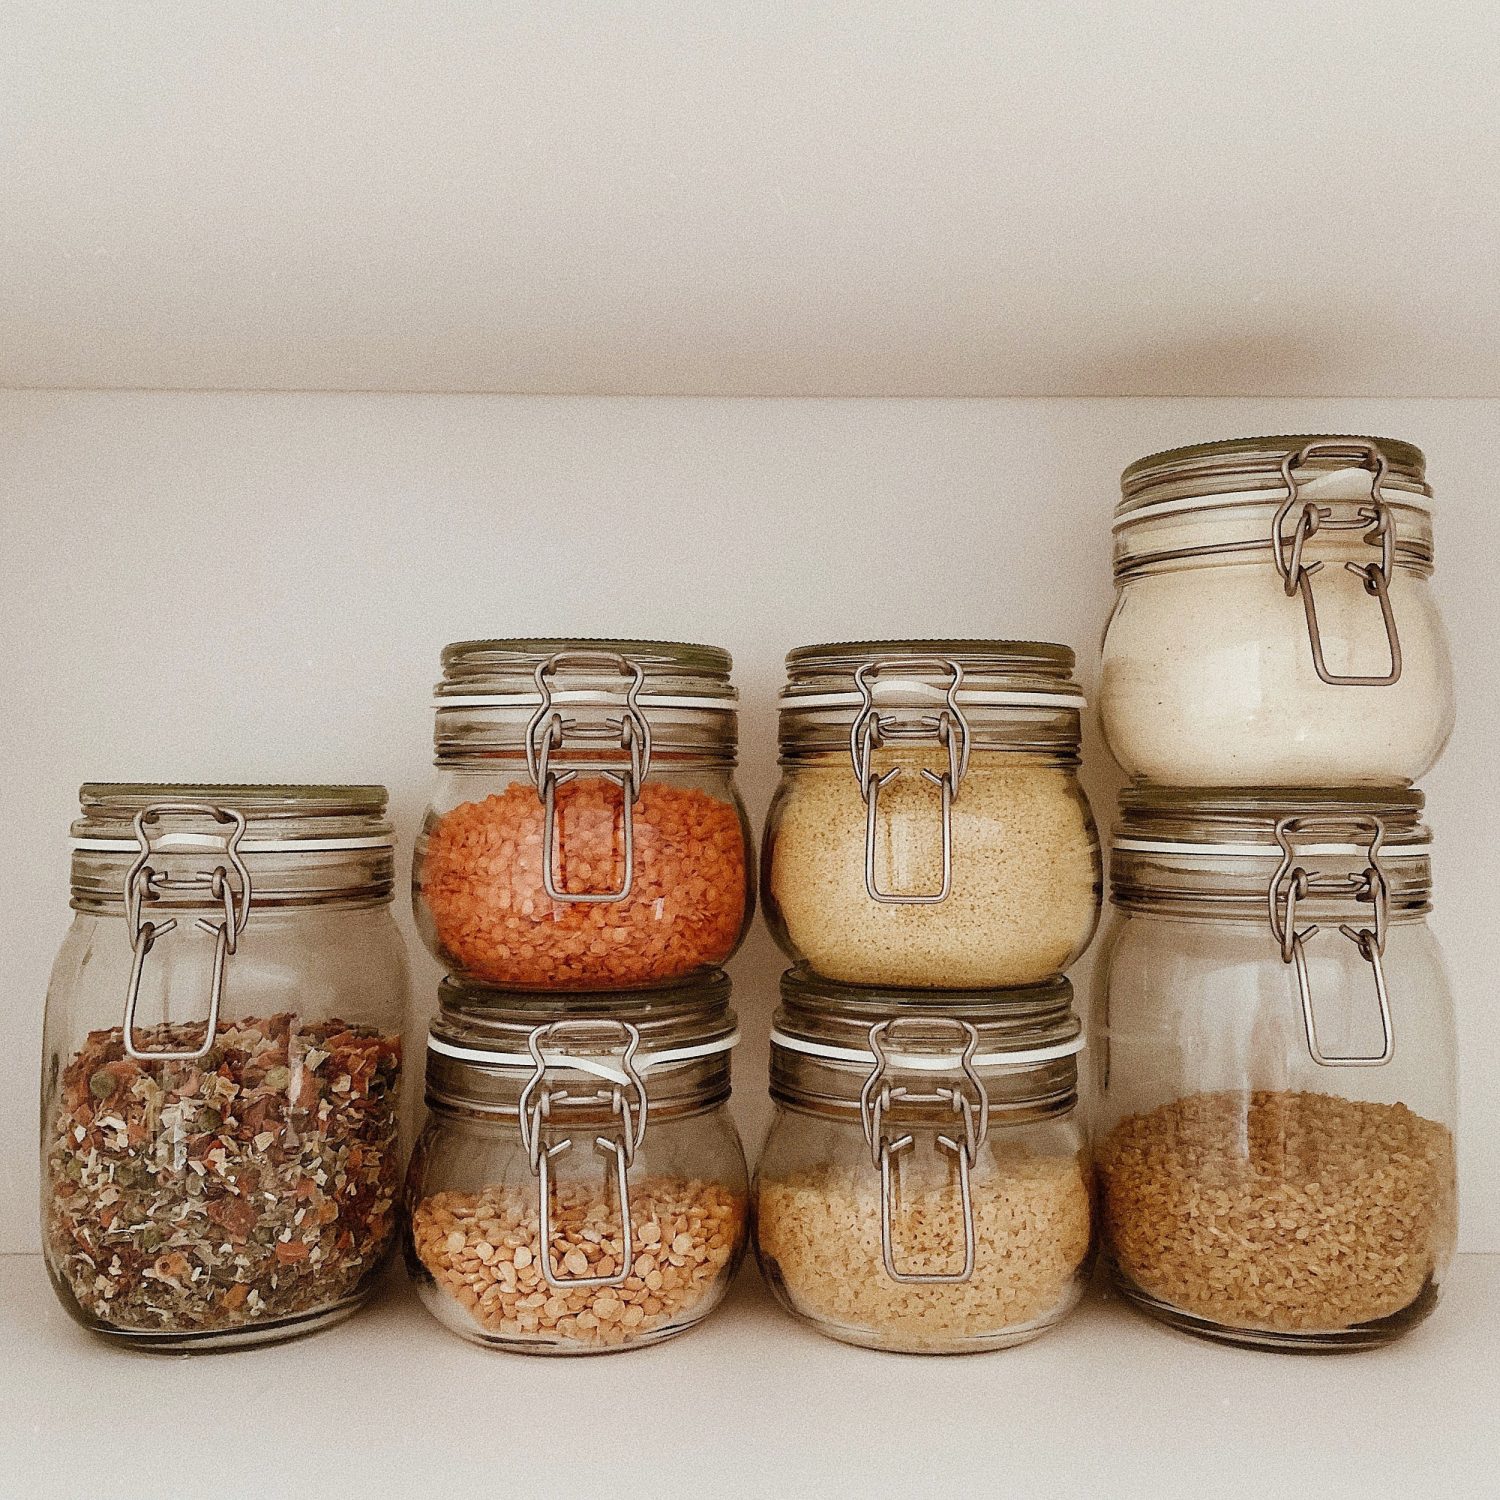 organized jars